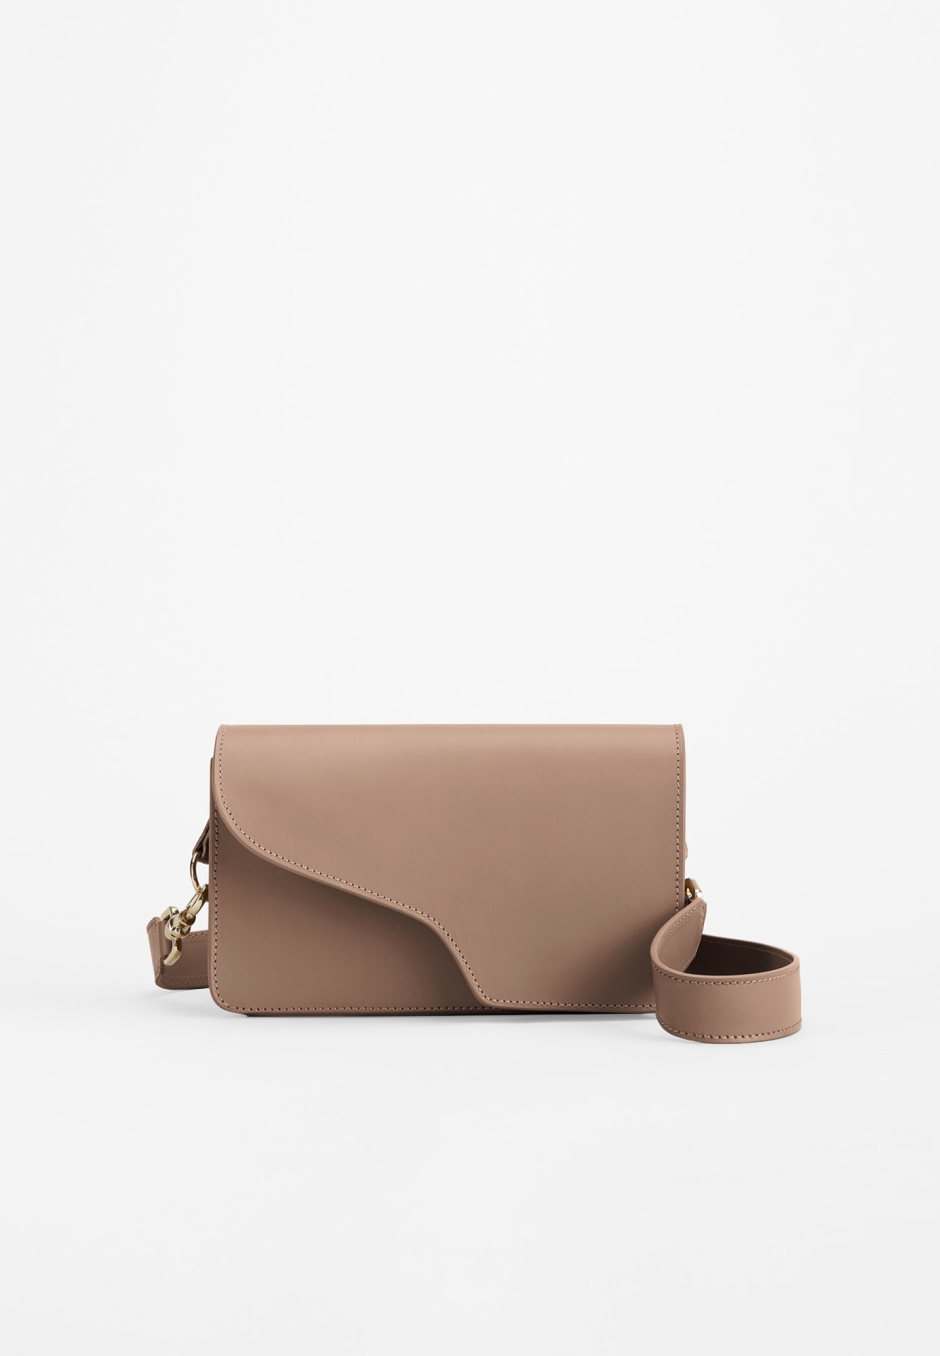 ATP Atelier Assisi Hazelnut Leather Baguette Bag